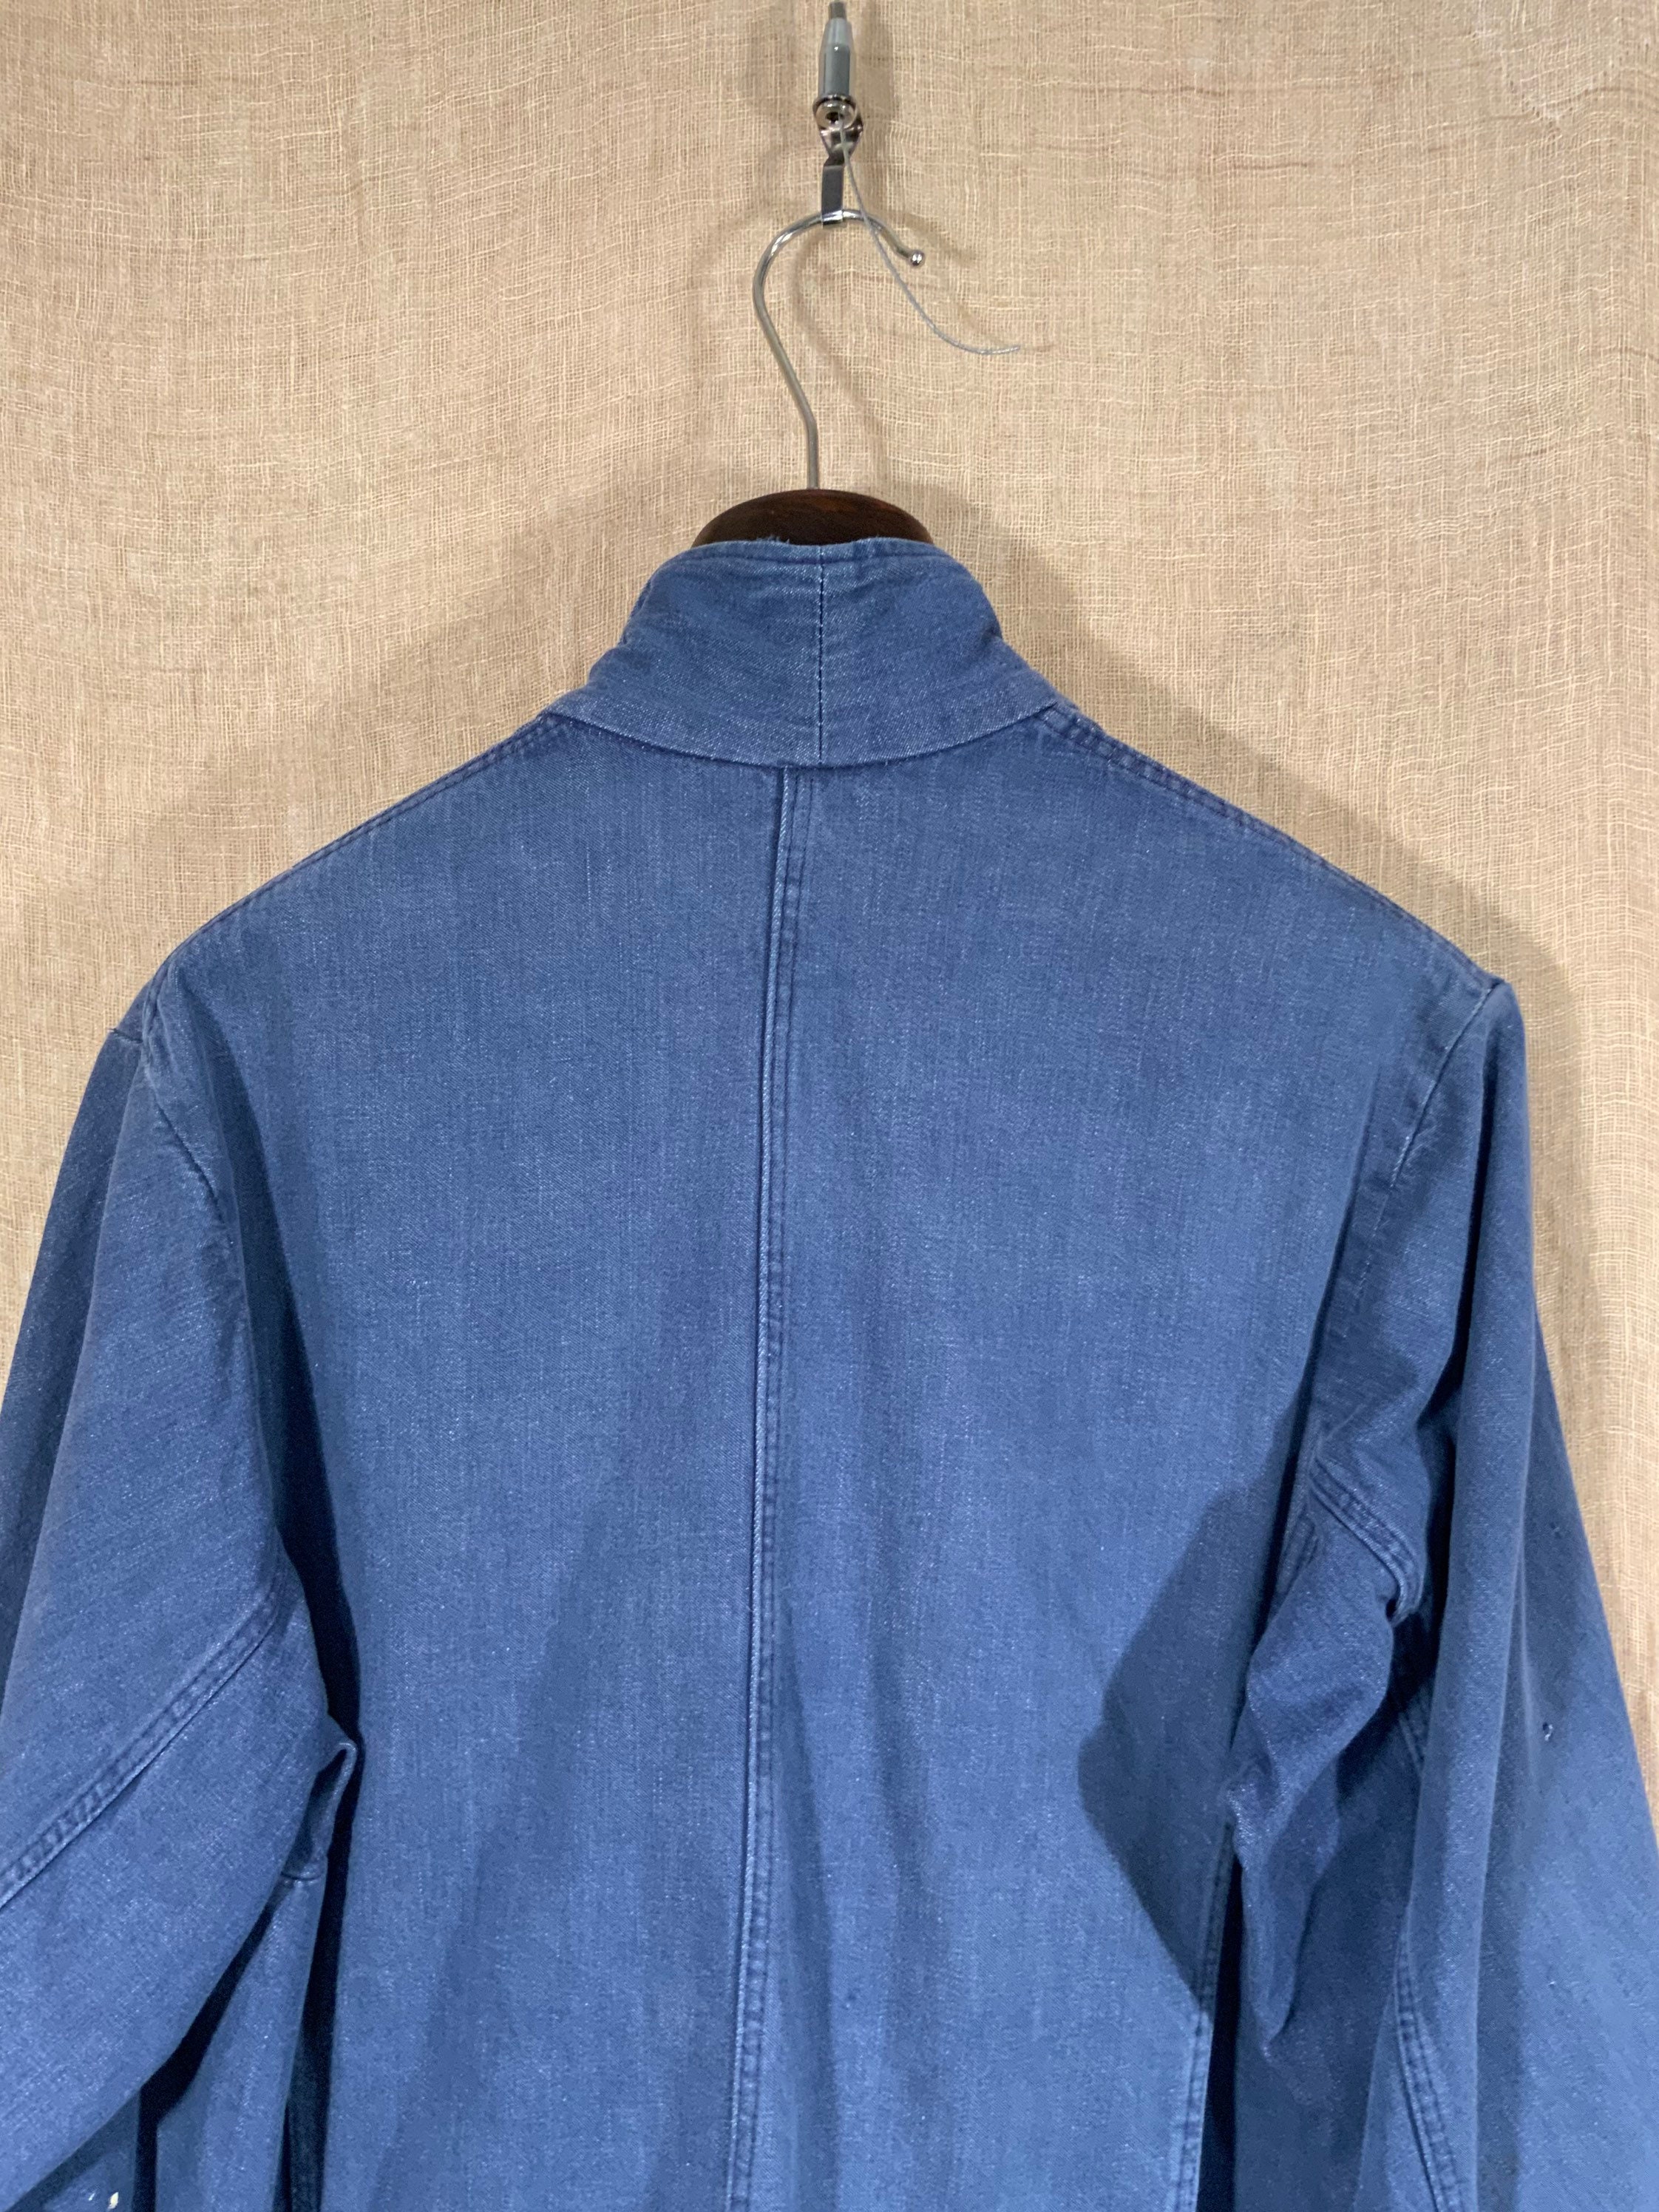 French 1960s light blue indigo denim chore jacket great signs | Etsy